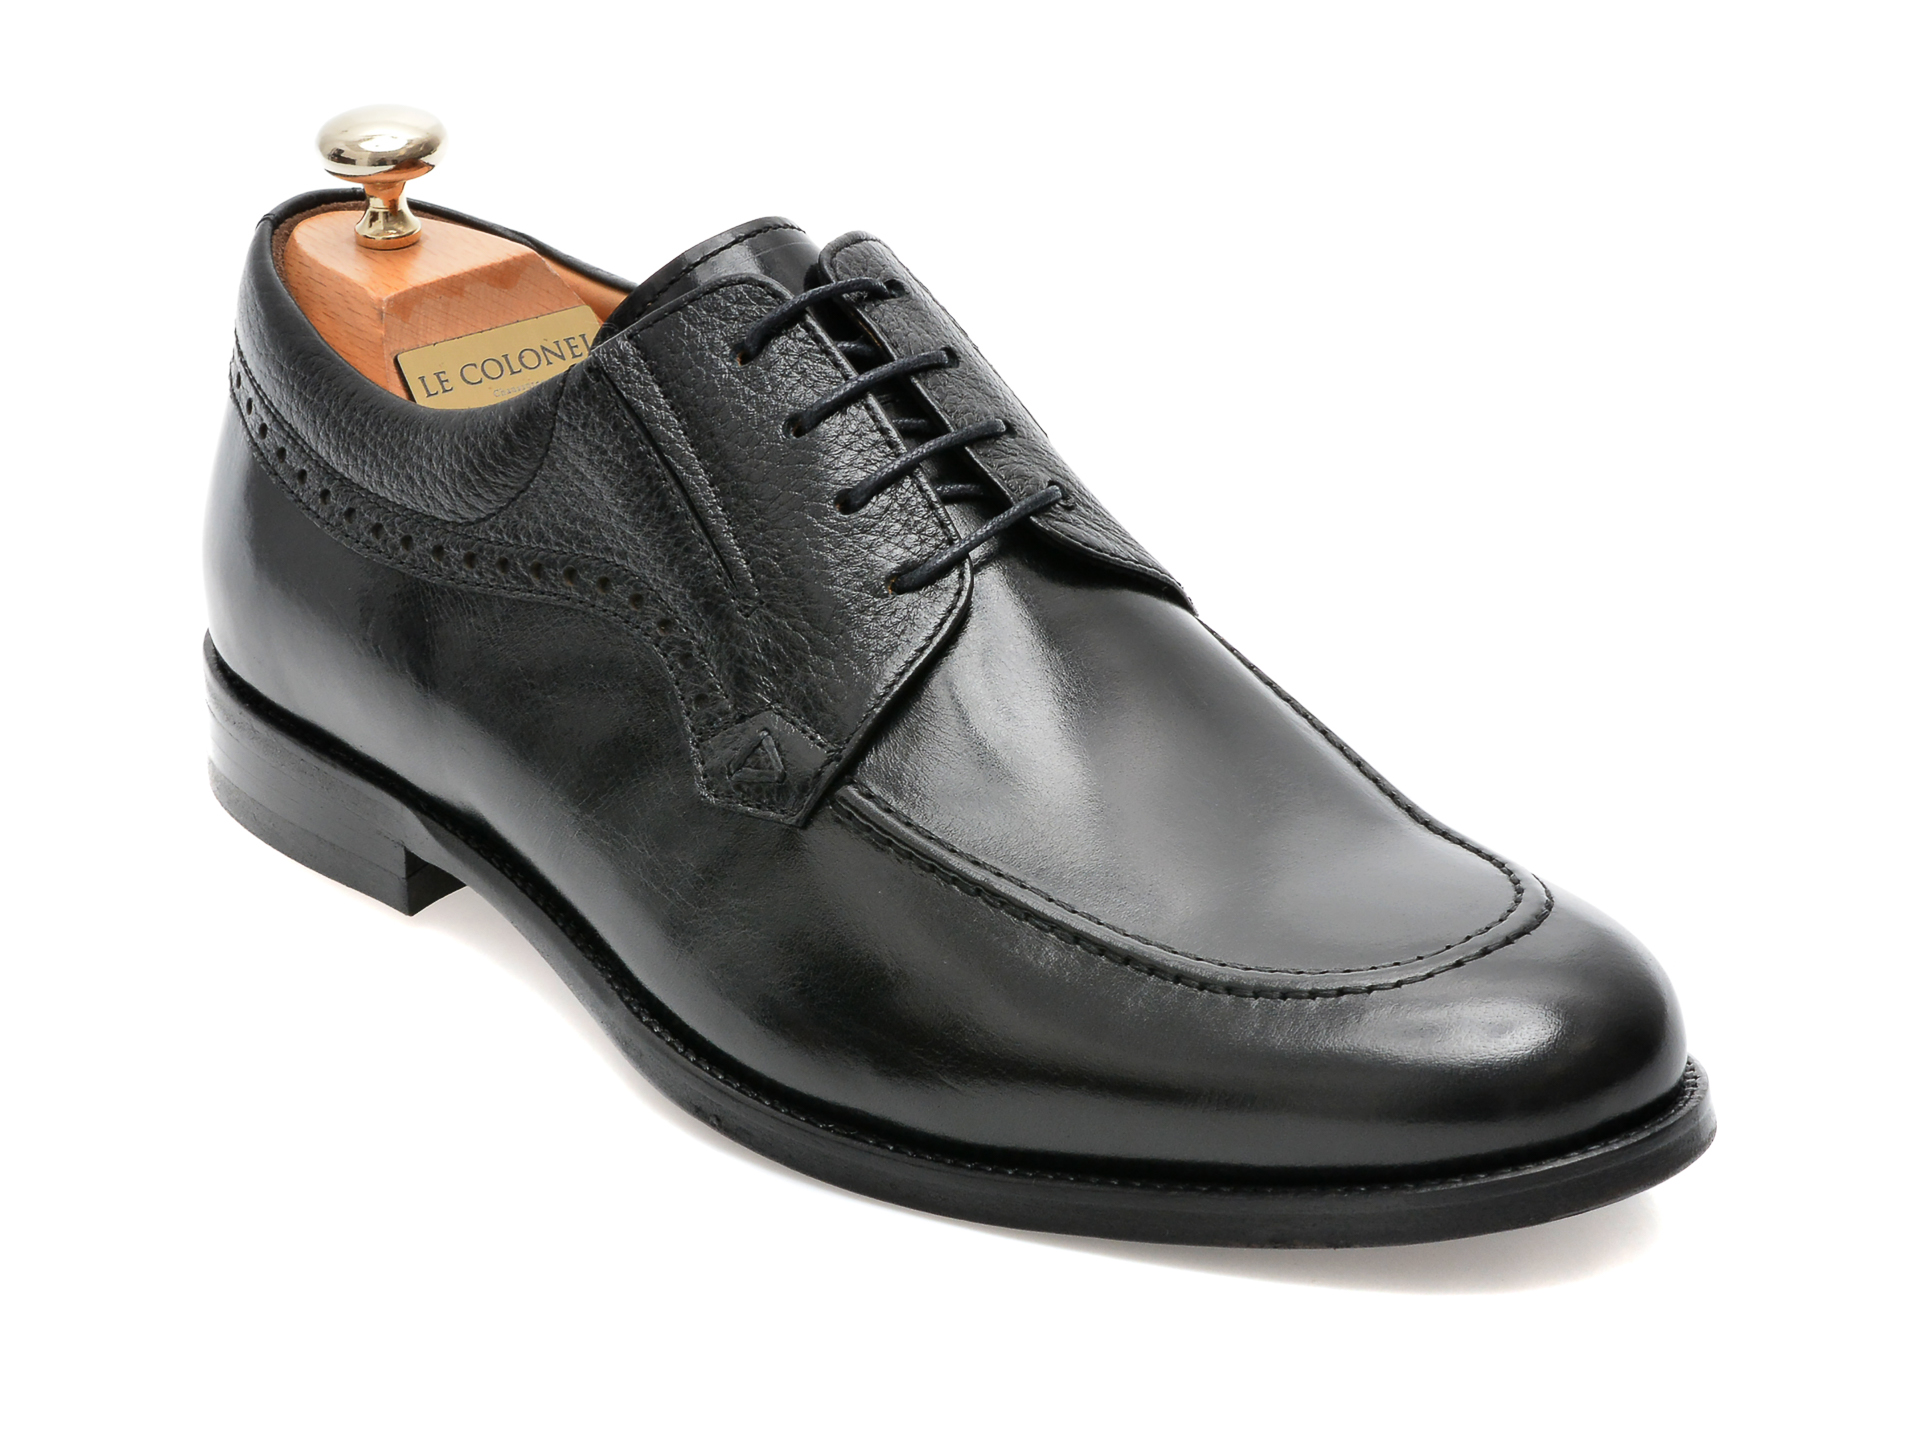 Pantofi LE COLONEL negri, 44746, din piele naturala